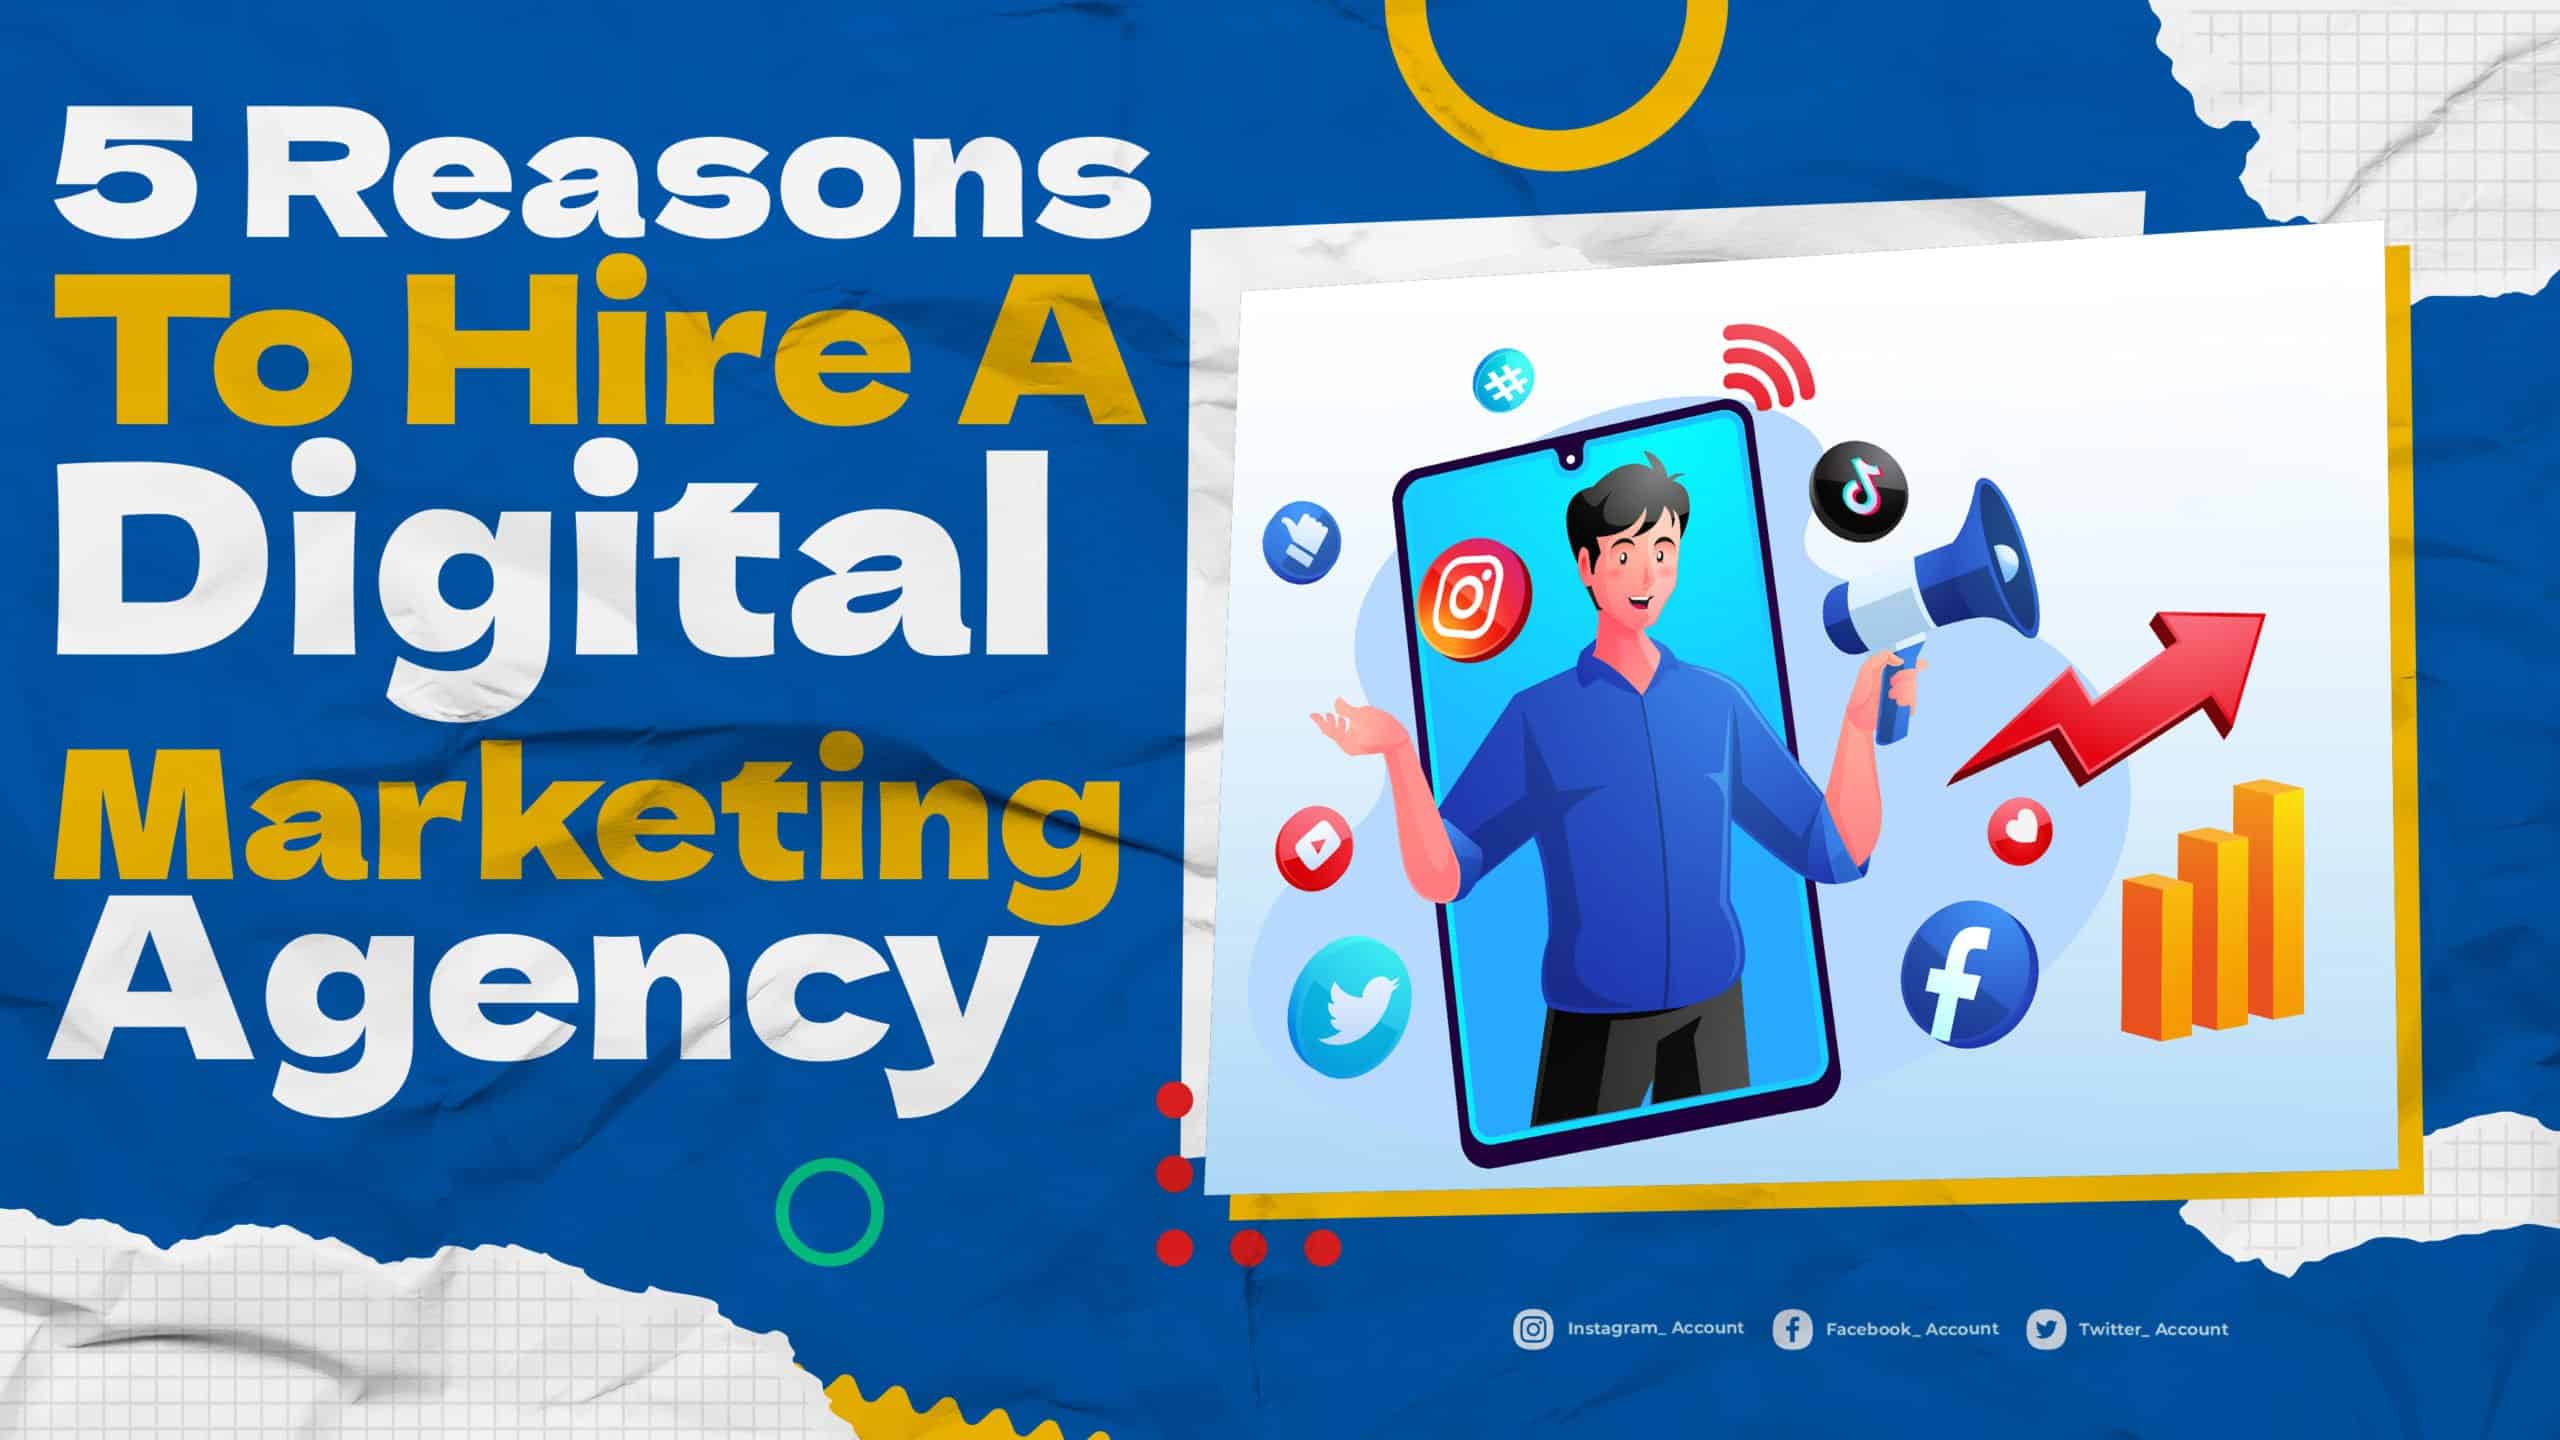 5 reasons to hire a digital marketing agency